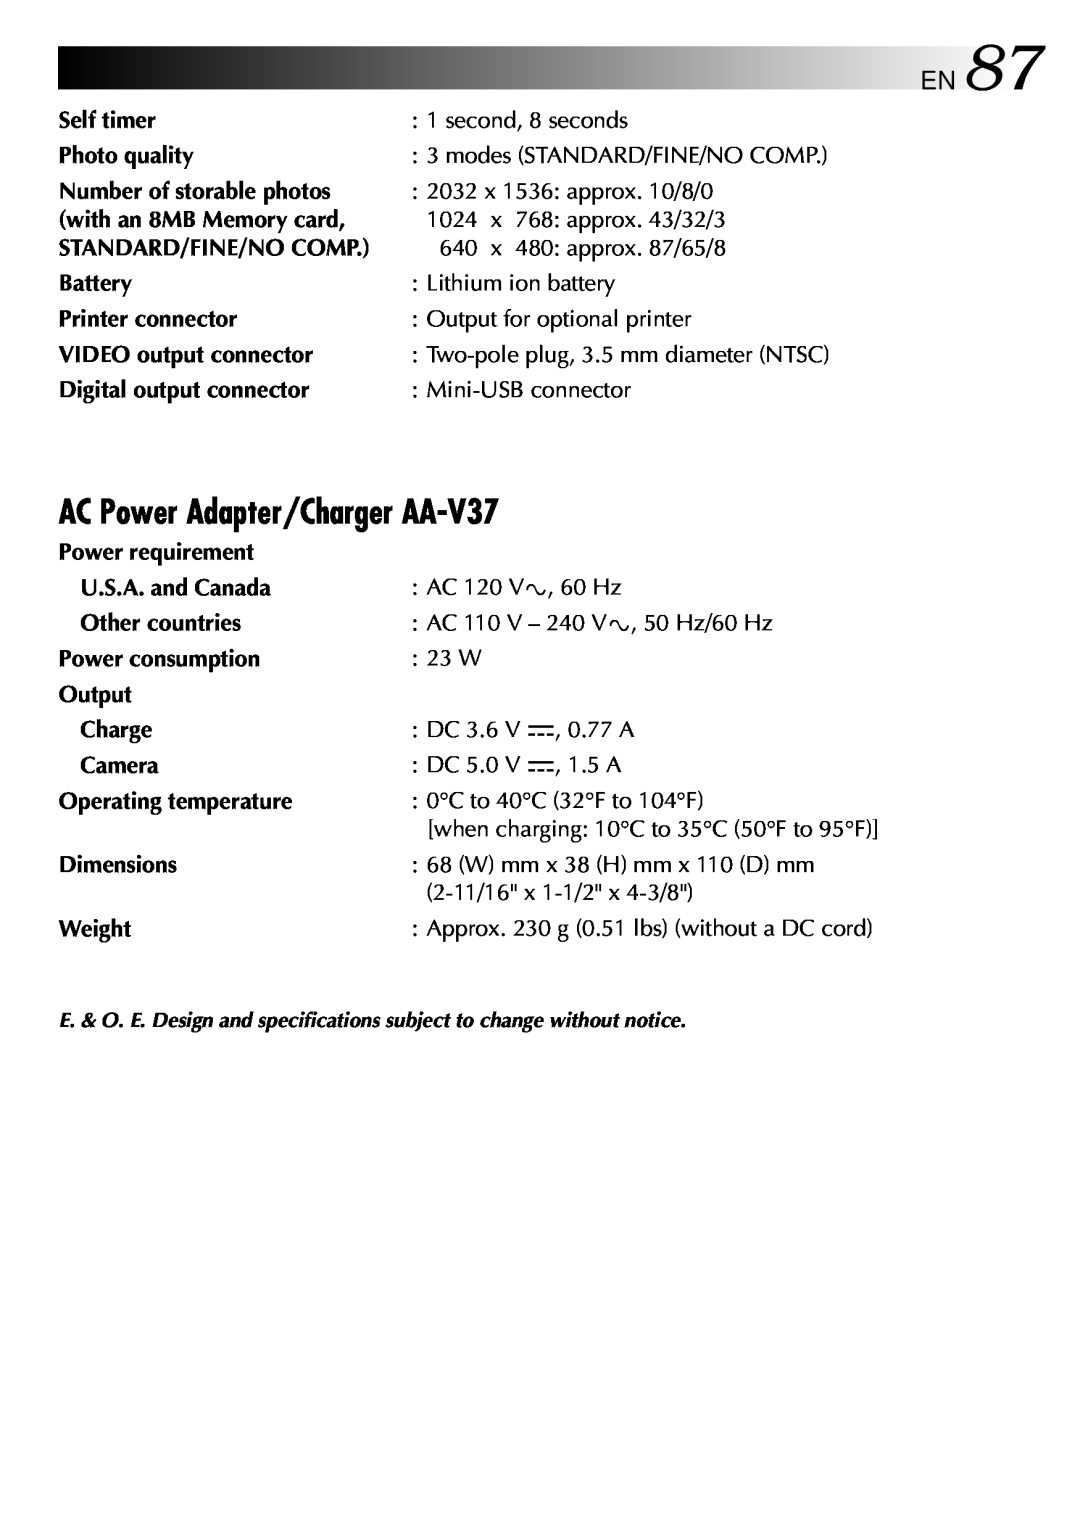 JVC GC-QX3 manual AC Power Adapter/Charger AA-V37, EN87 